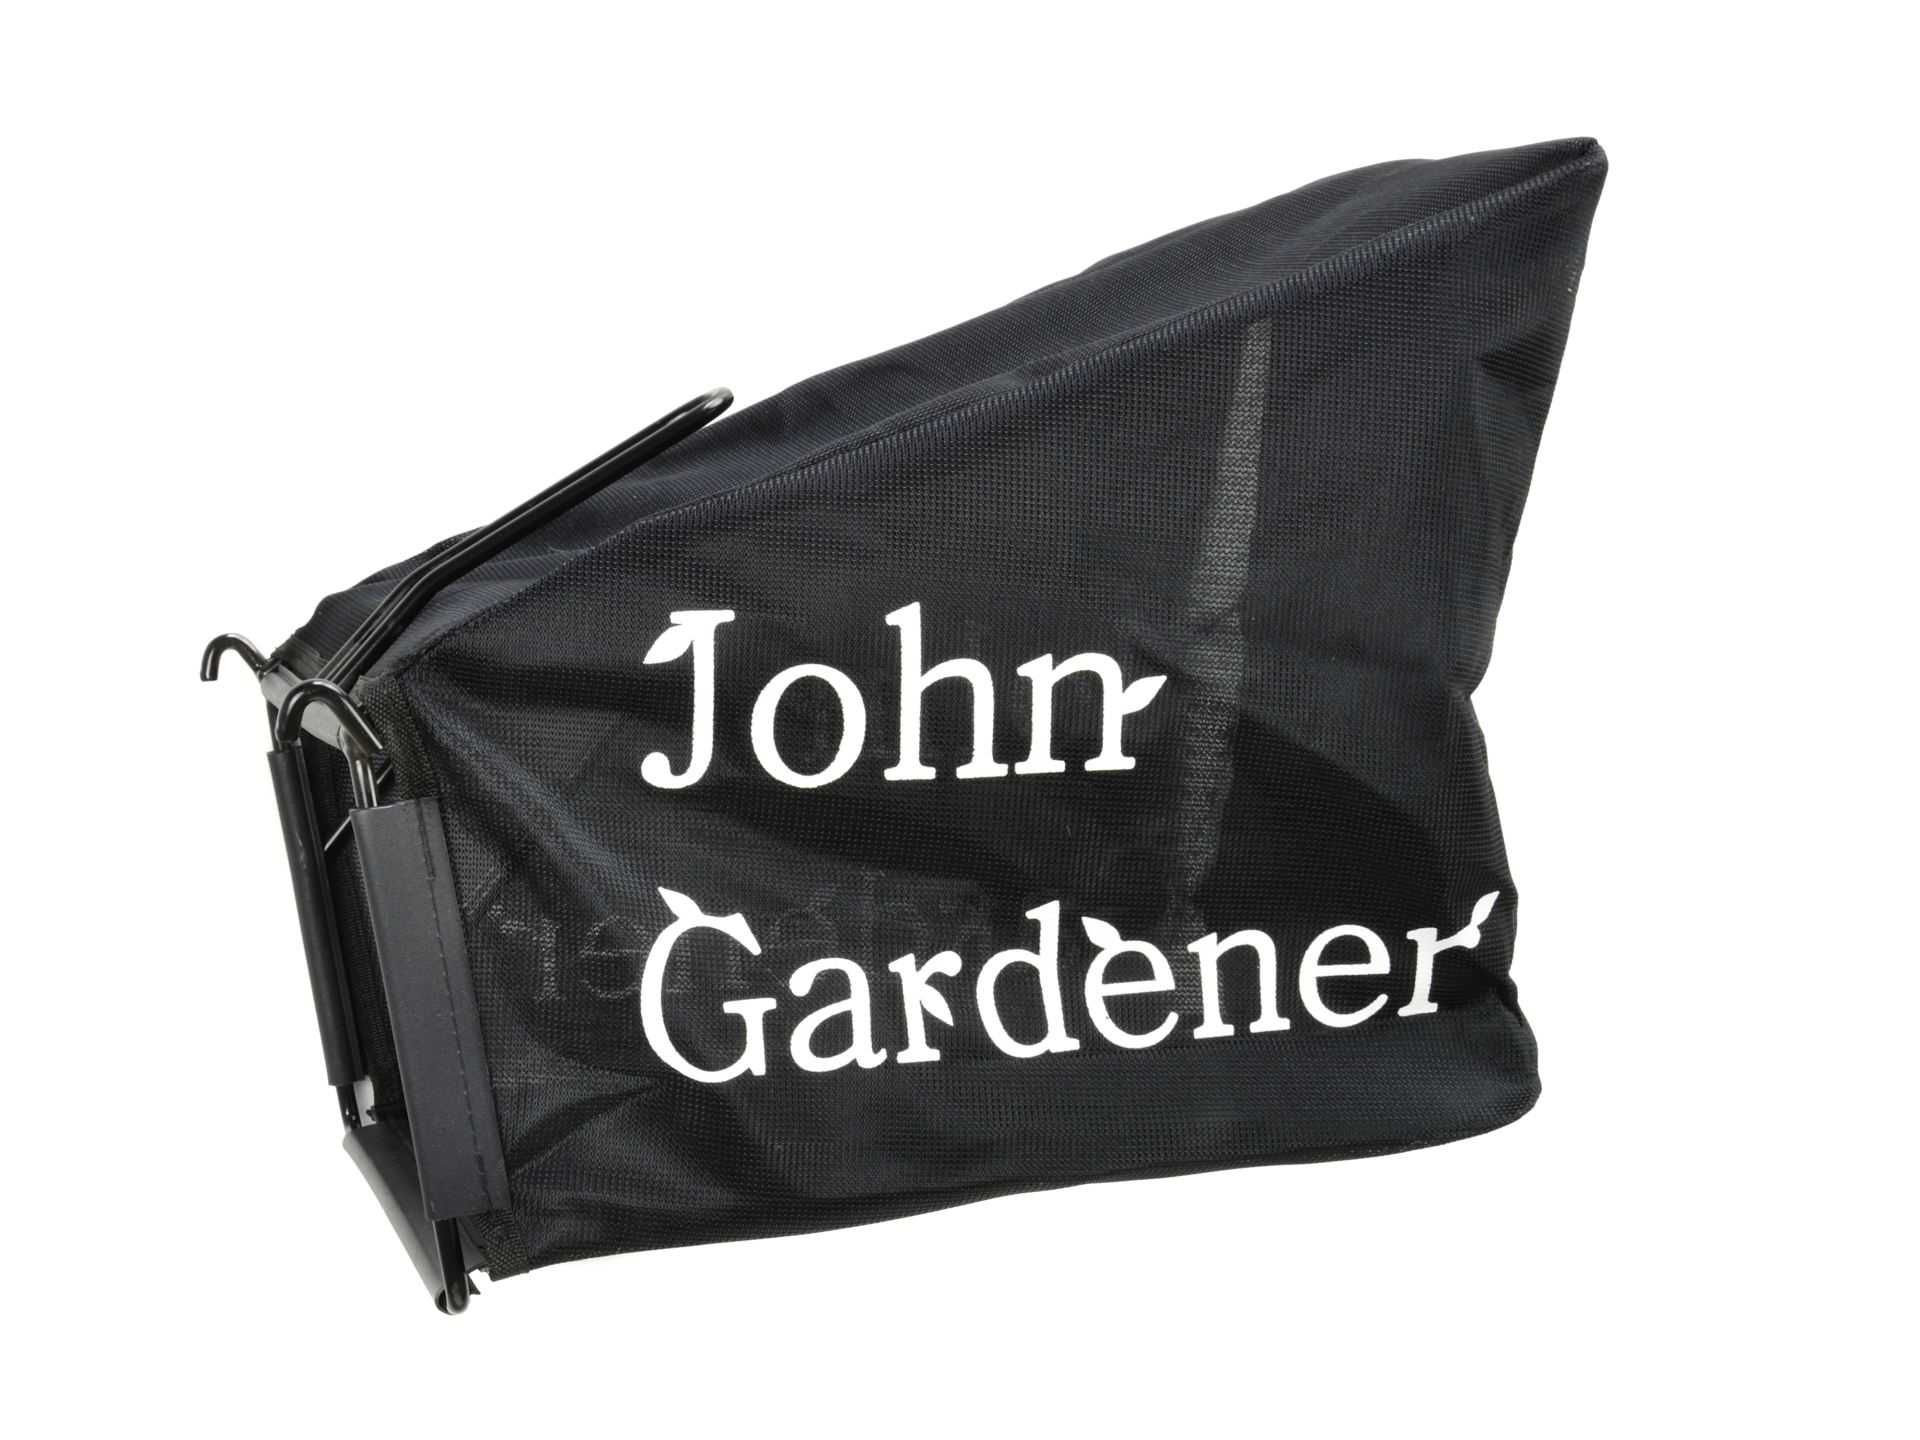 Kosiarka spalinowa 40cm /metal obudowa/ JOHN GARDENER